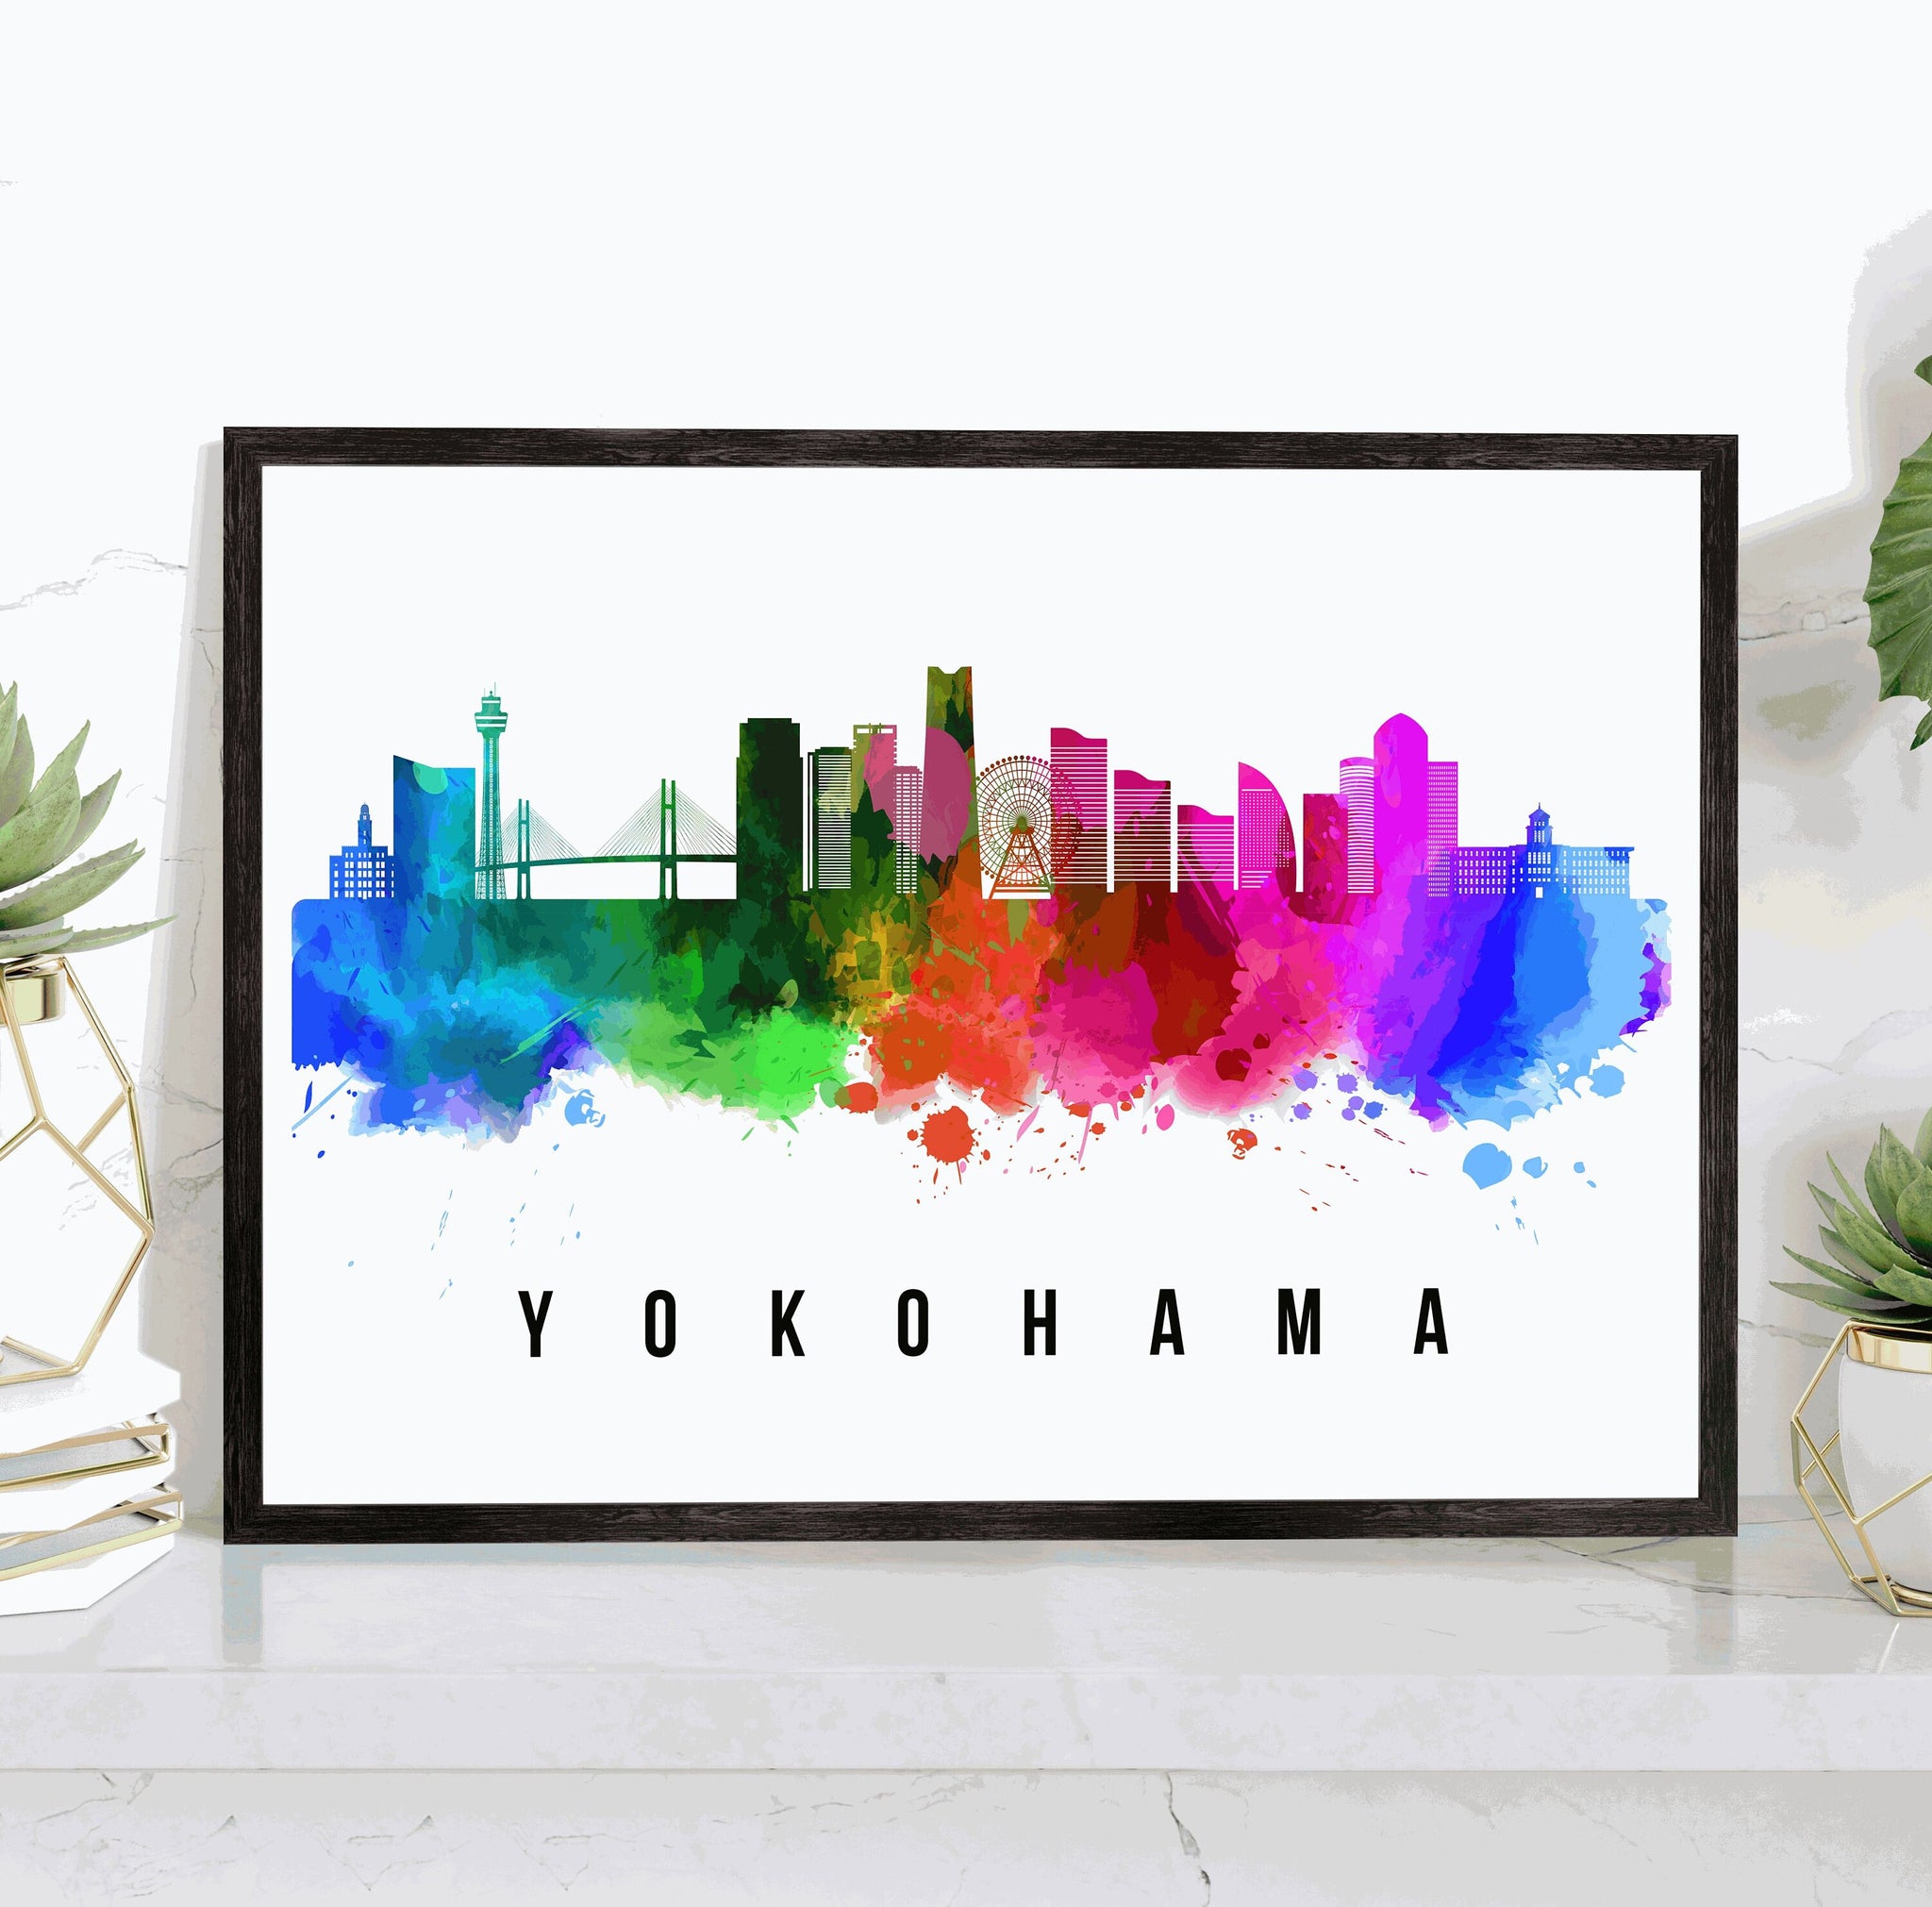 YOKOHAMA - JAPAN Poster,  Skyline Poster Cityscape and Landmark Yokohama Illustration Home Wall Art, Office Decor